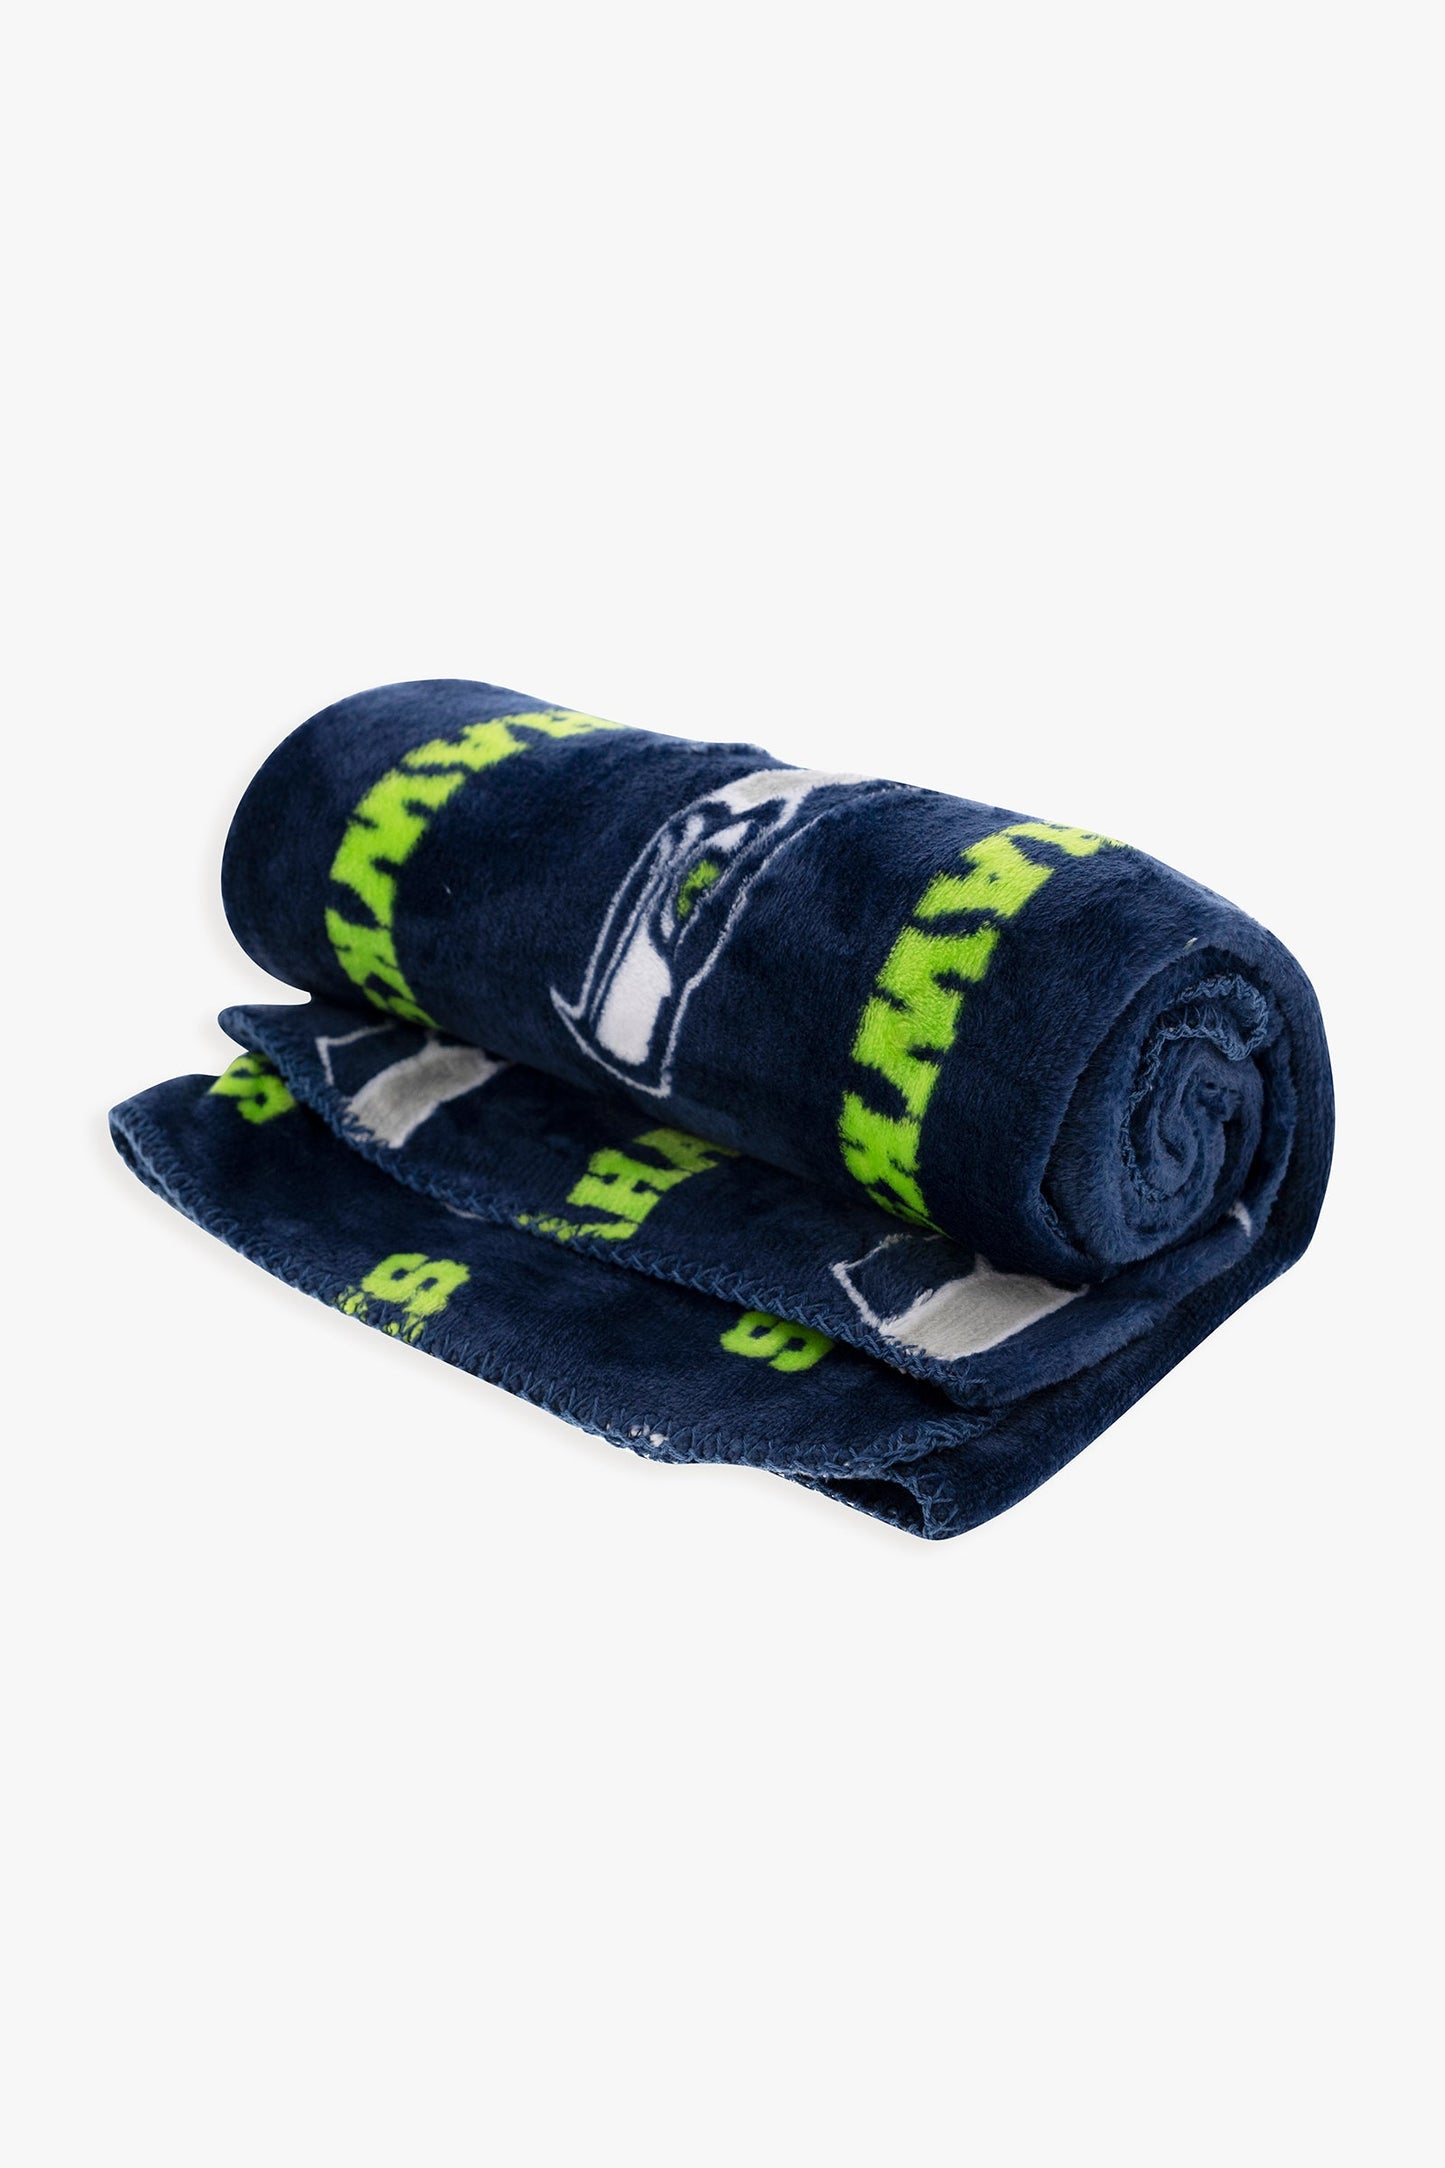 NFL Coral Fleece Travel Throw Blanket with Team Logos | 150cm x 120cm (59" x 47")